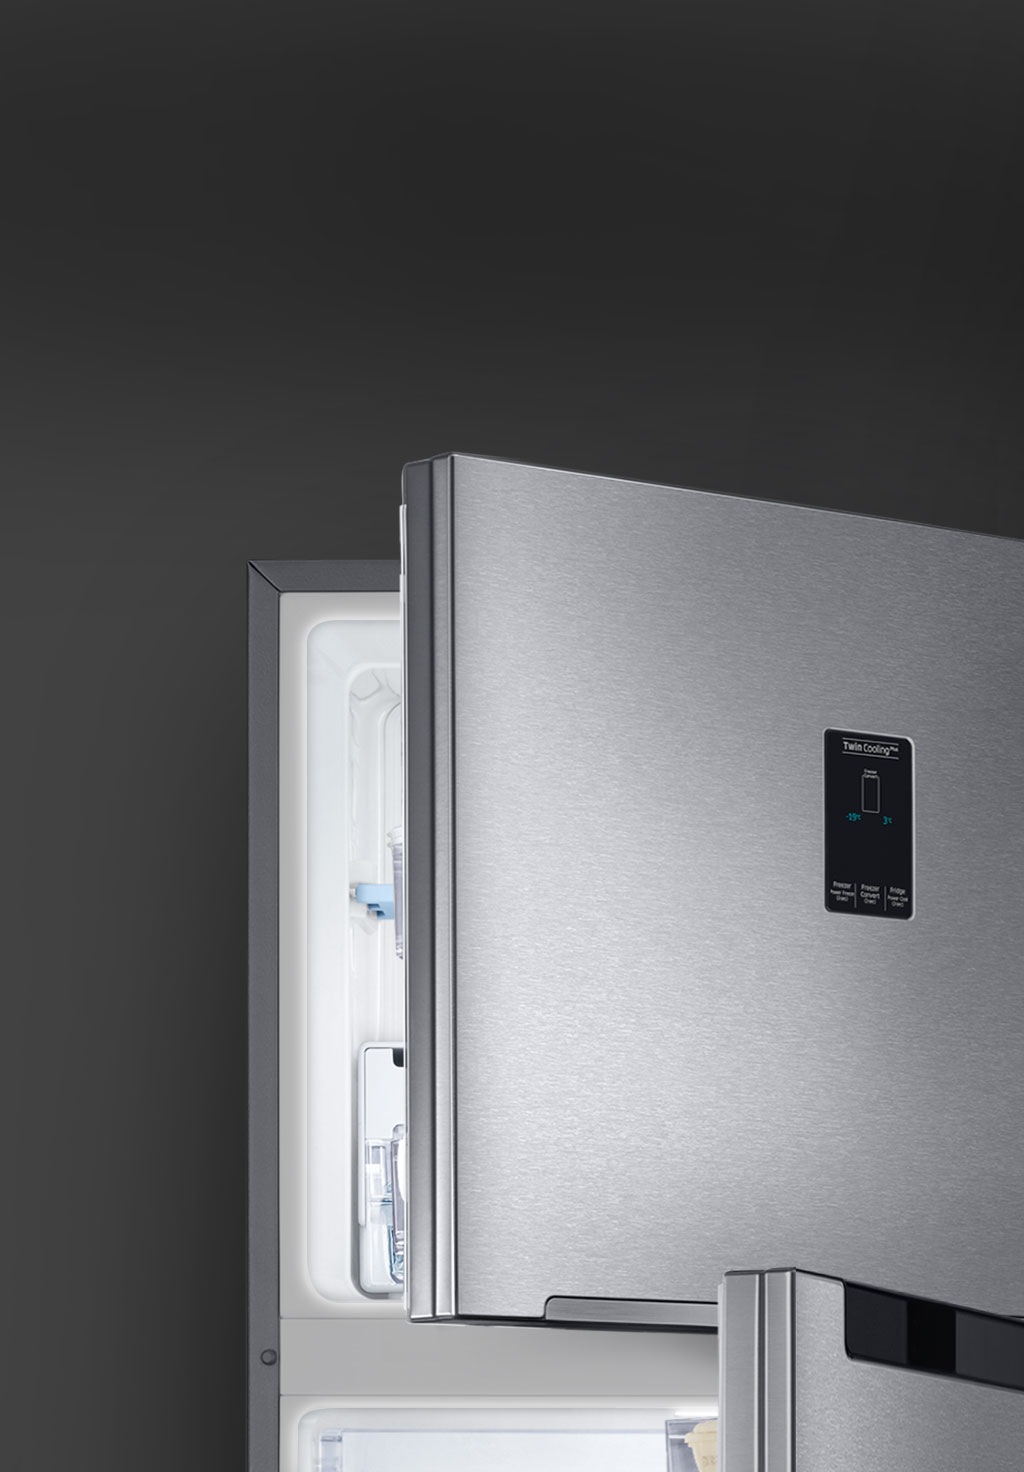 RT32K5000WW SAMSUNG Réfrigérateur congélateur en haut pas cher ✔️ Garantie  5 ans OFFERTE